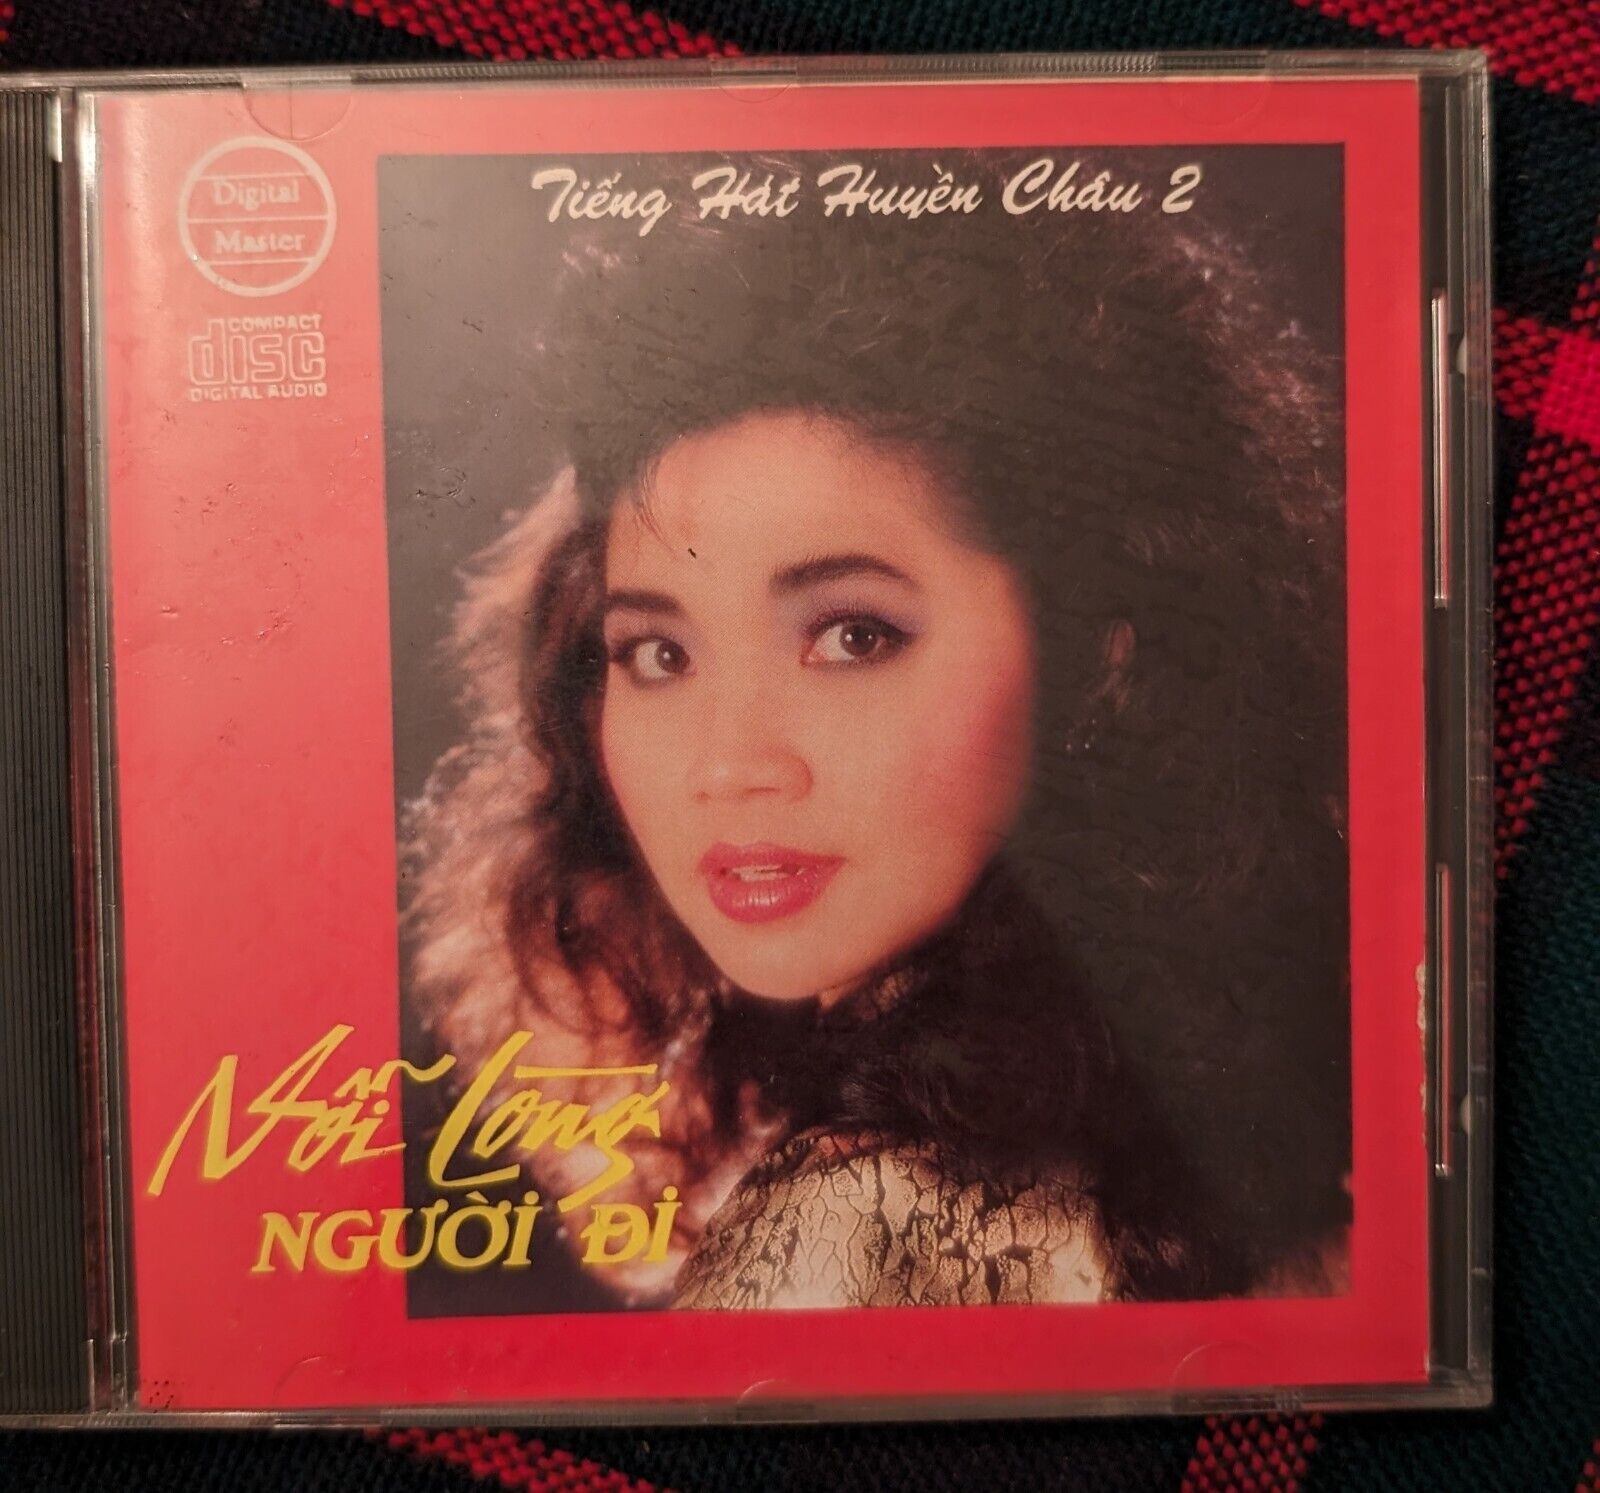 RARE VINTAGE ORIGINAL VIETNAMESE MUSIC CD:  Noi Long Nguoi Di, Various Artists